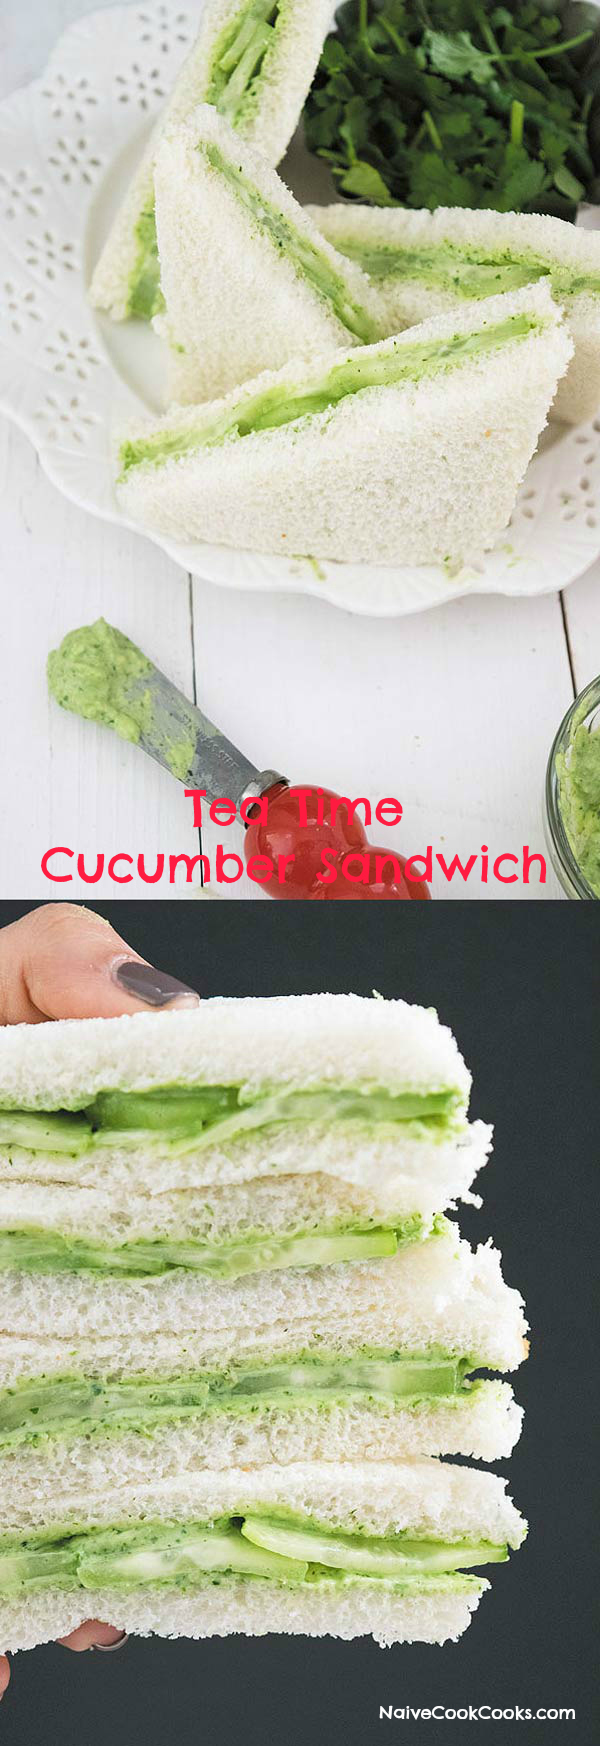 tea time cucumber sandwich 2